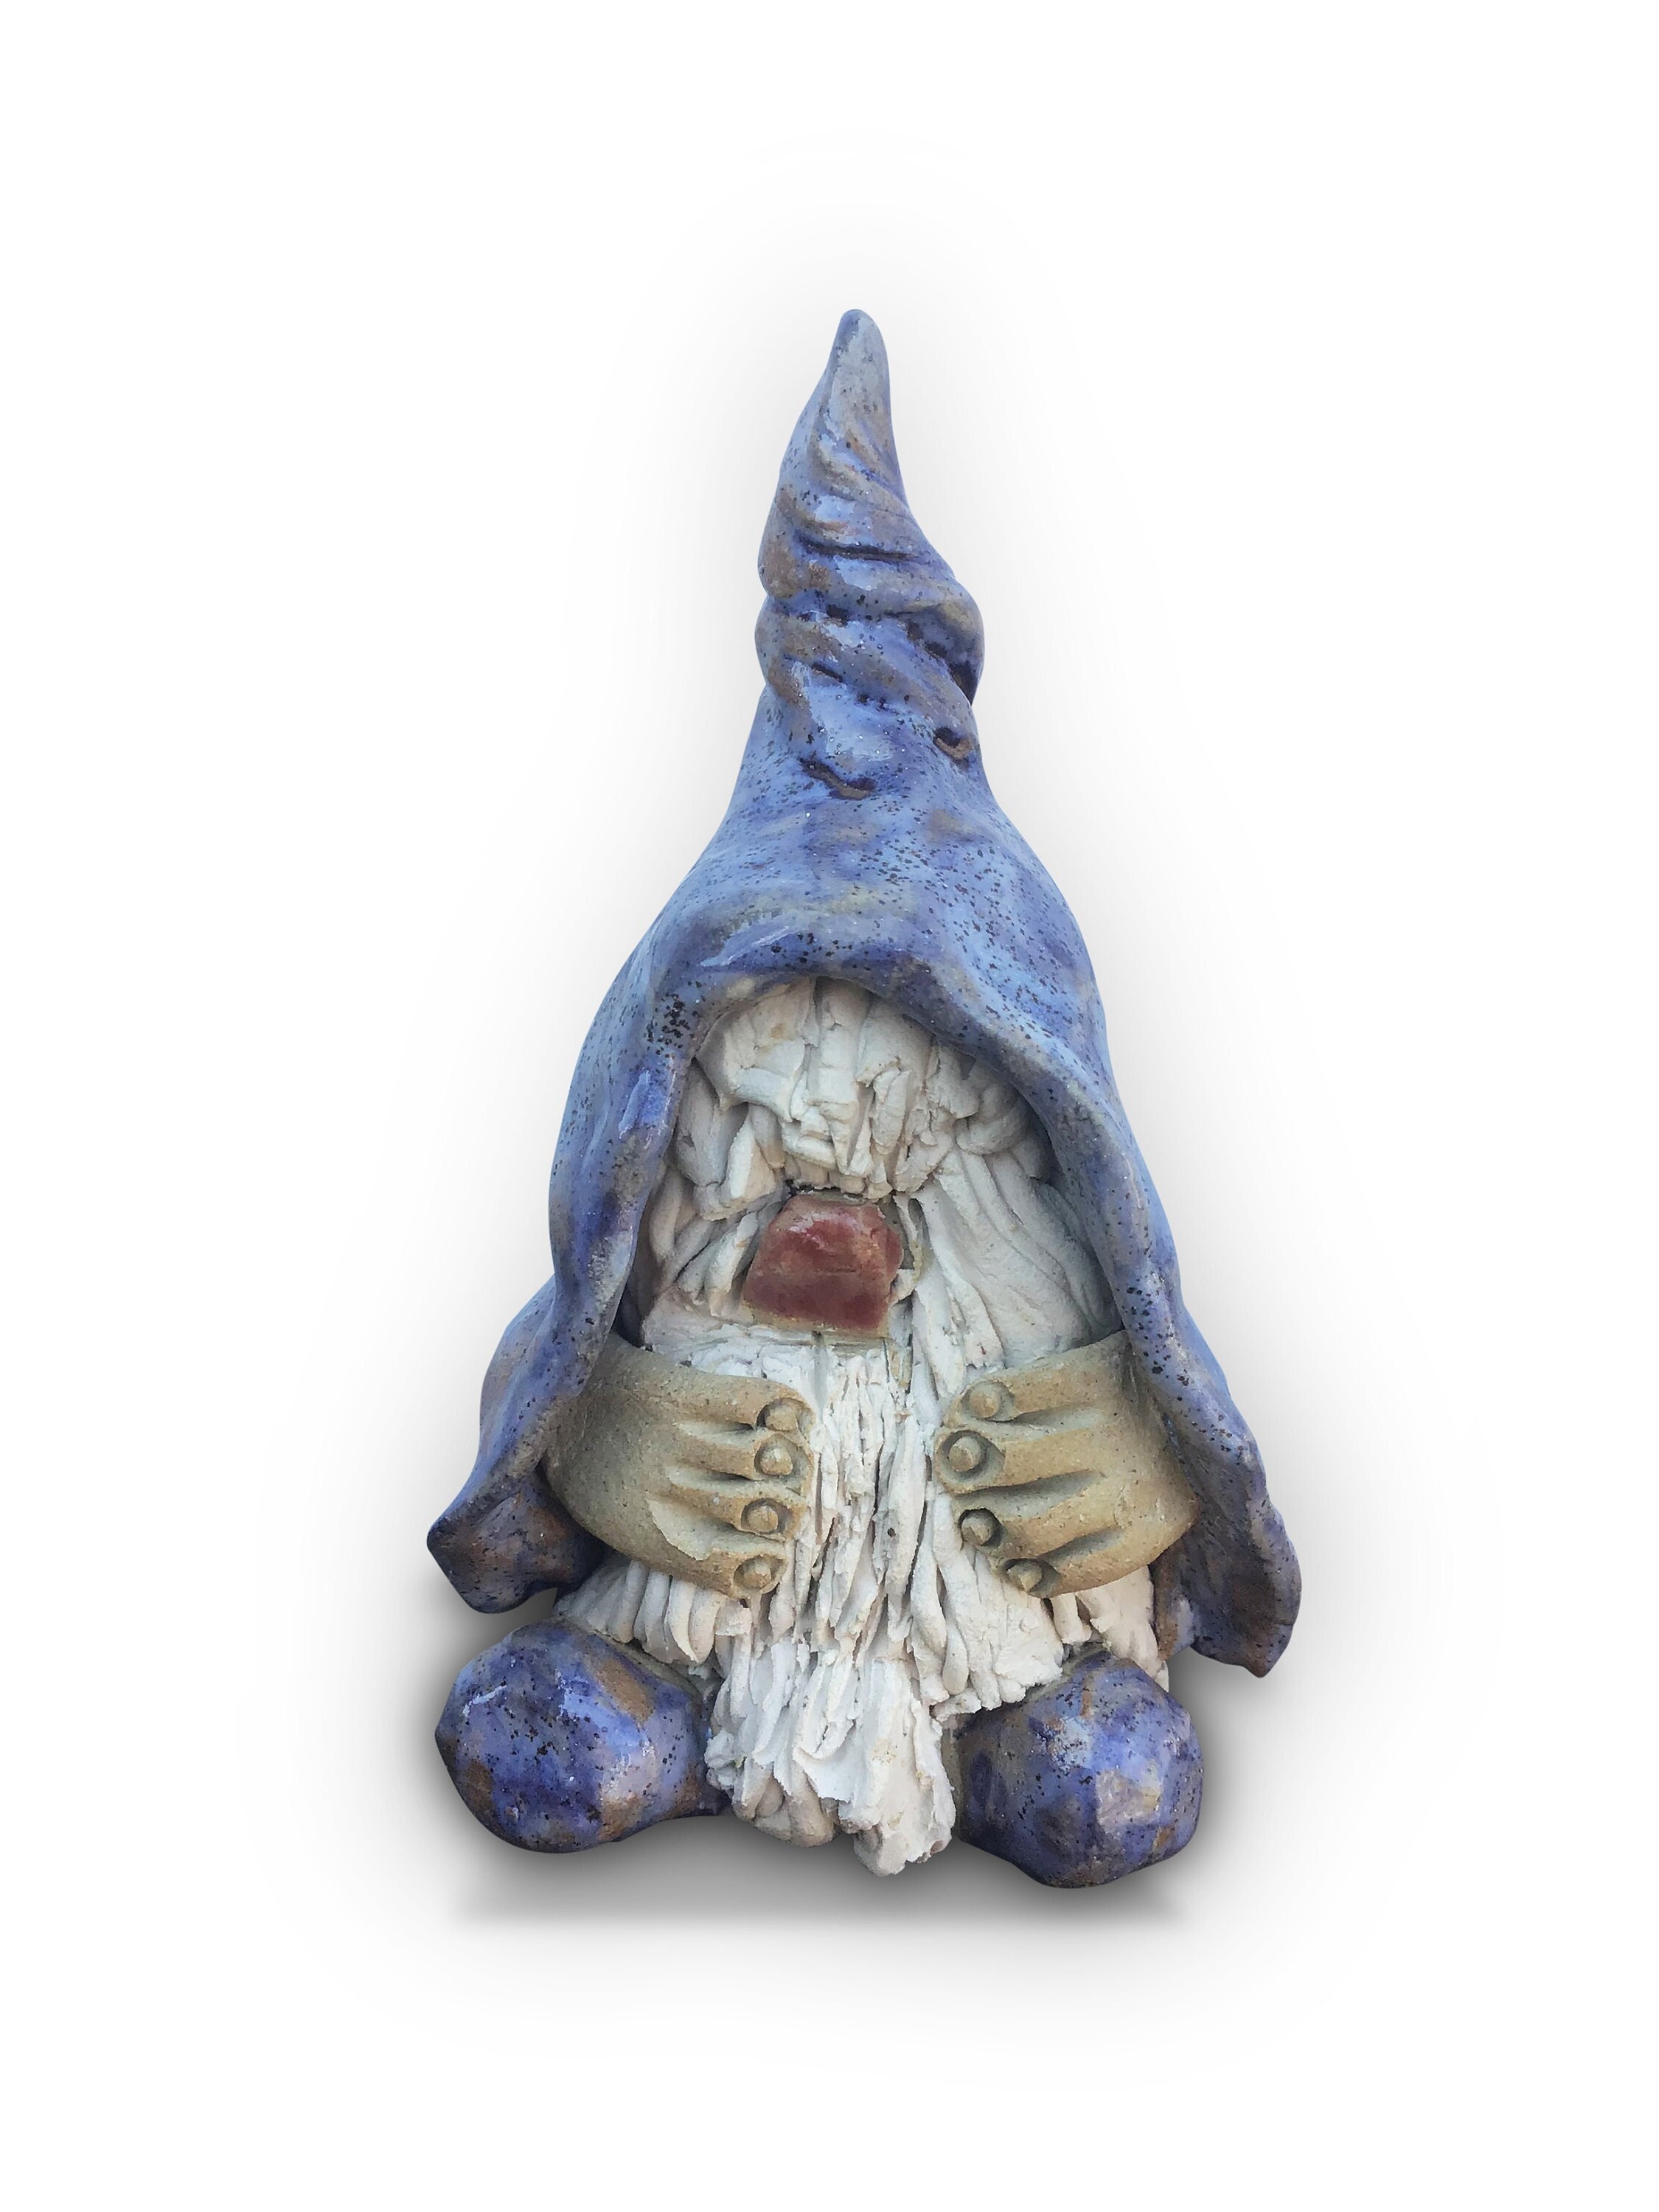 Hobbit Figurine, Ceramic Fairy Garden Wizard Ornament -  Canada